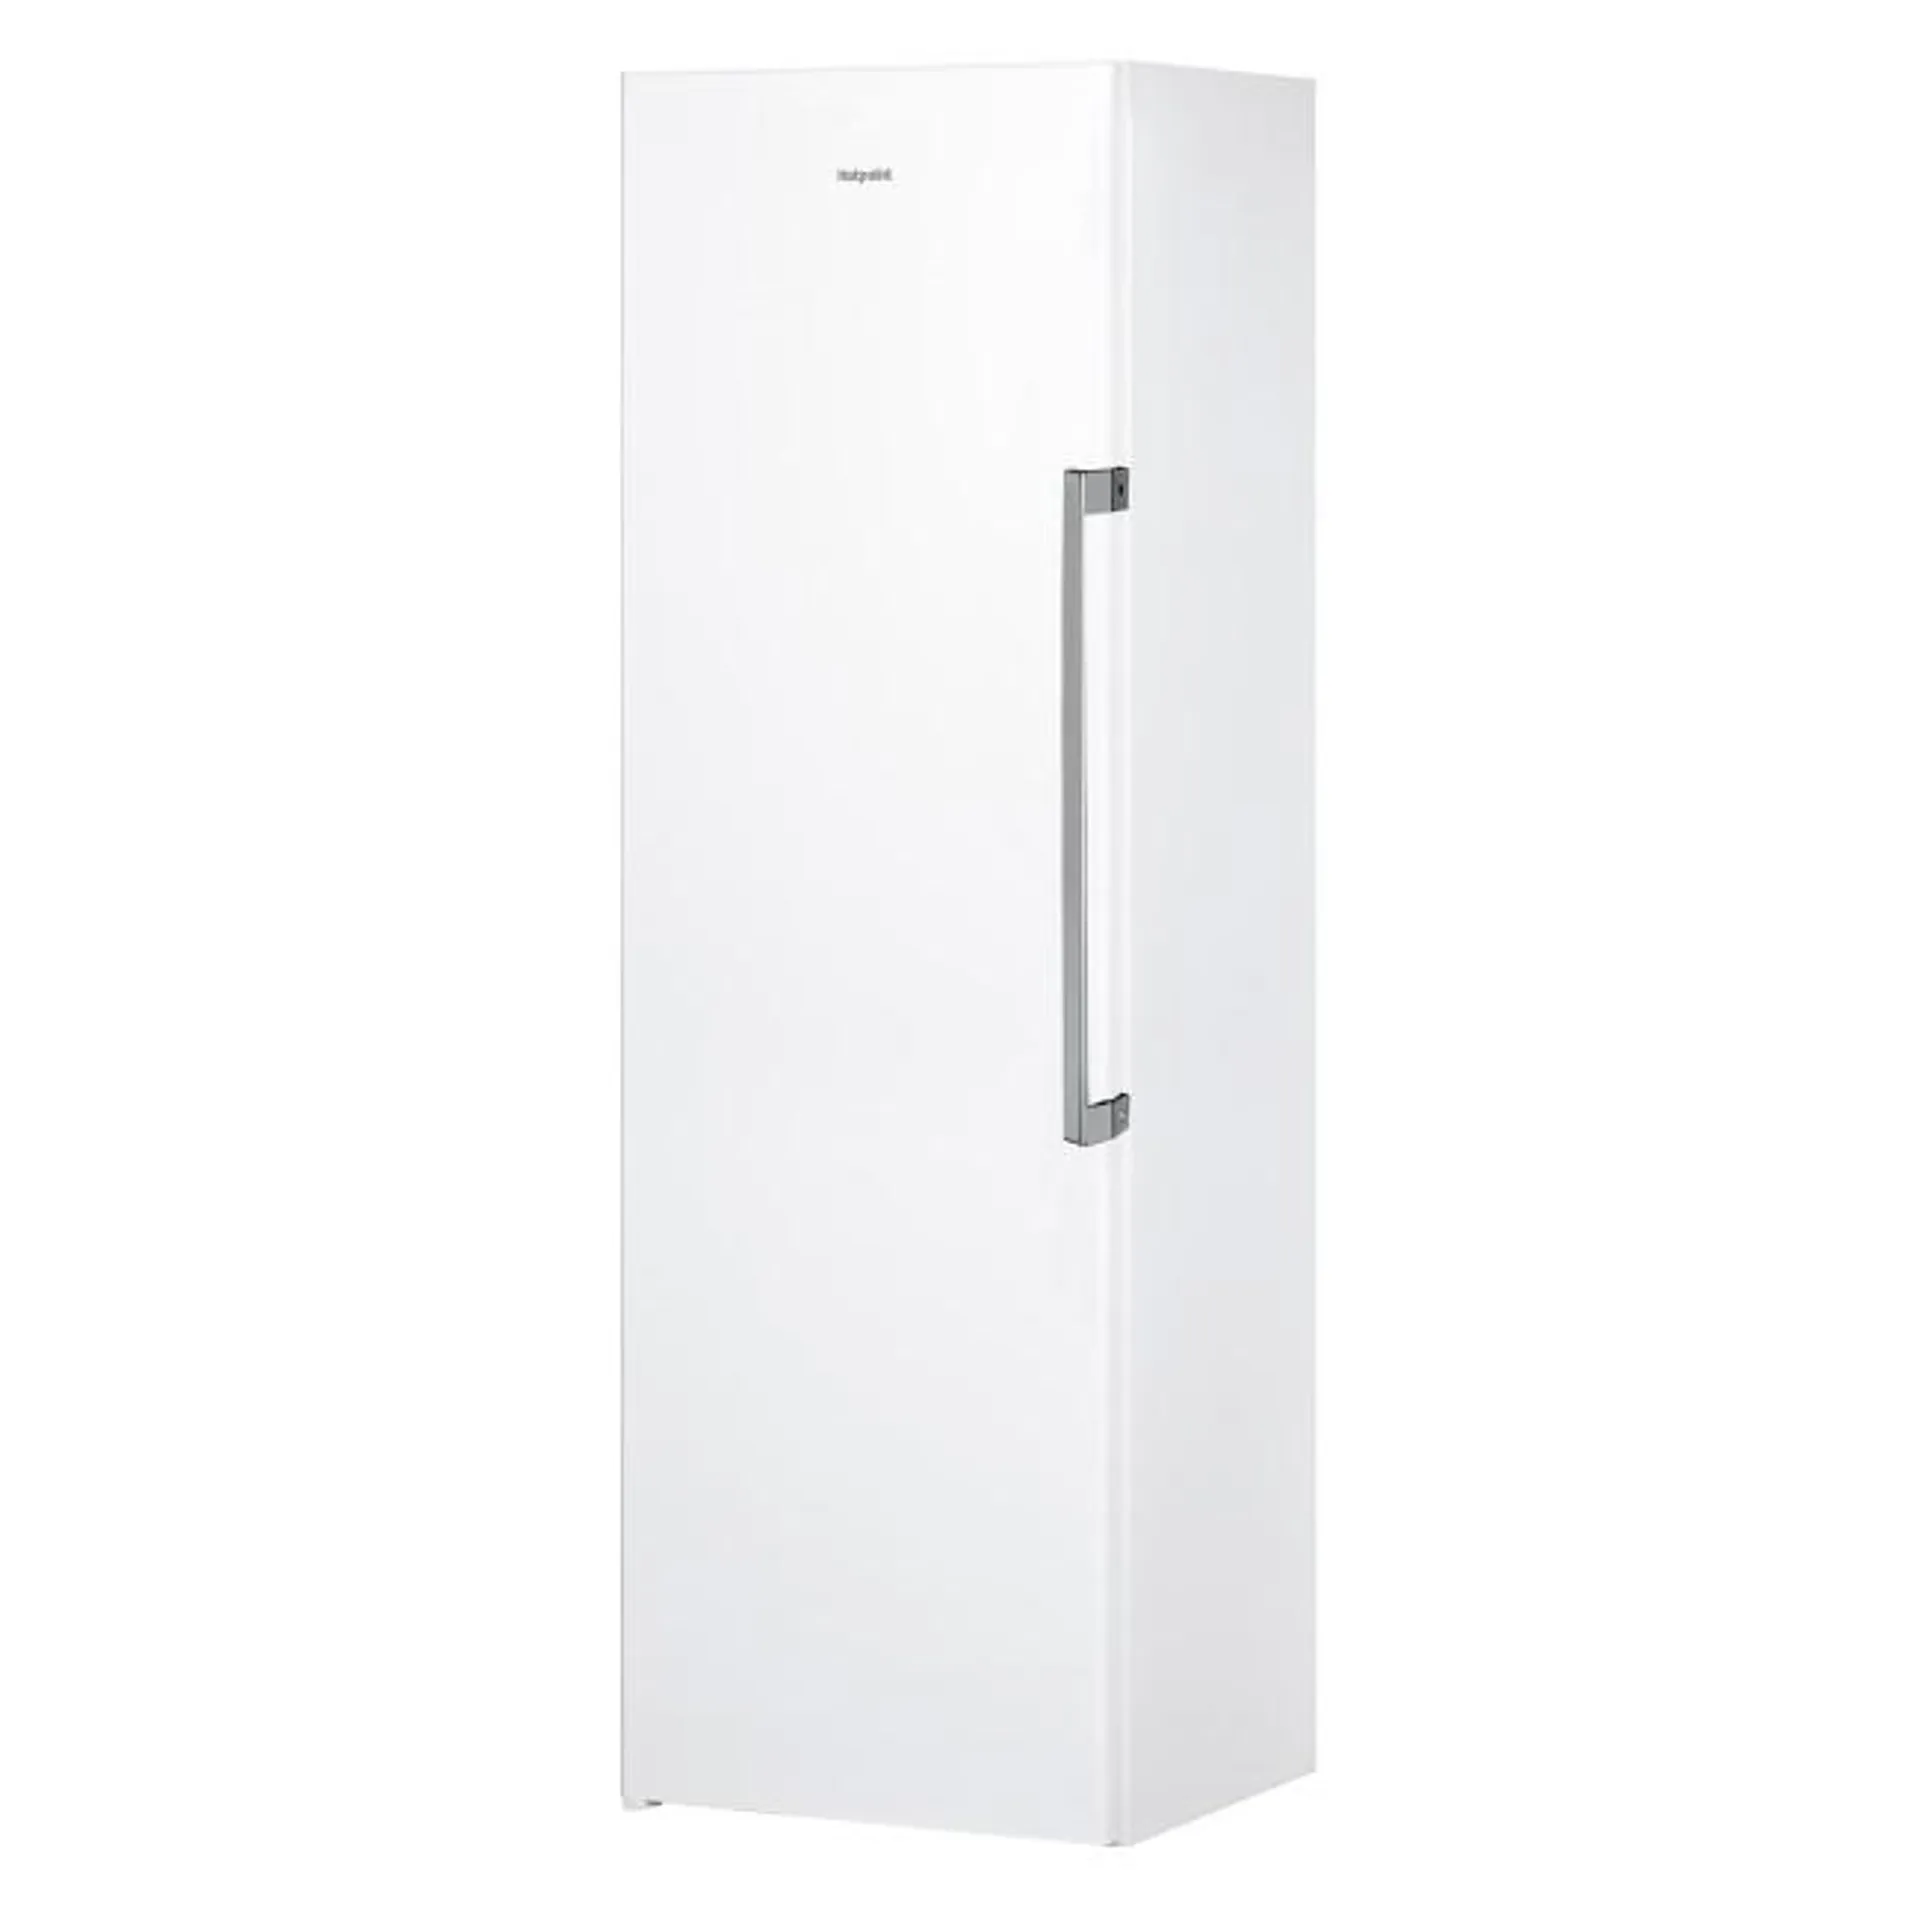 Hotpoint 291 Litre Freestanding Freezer - White